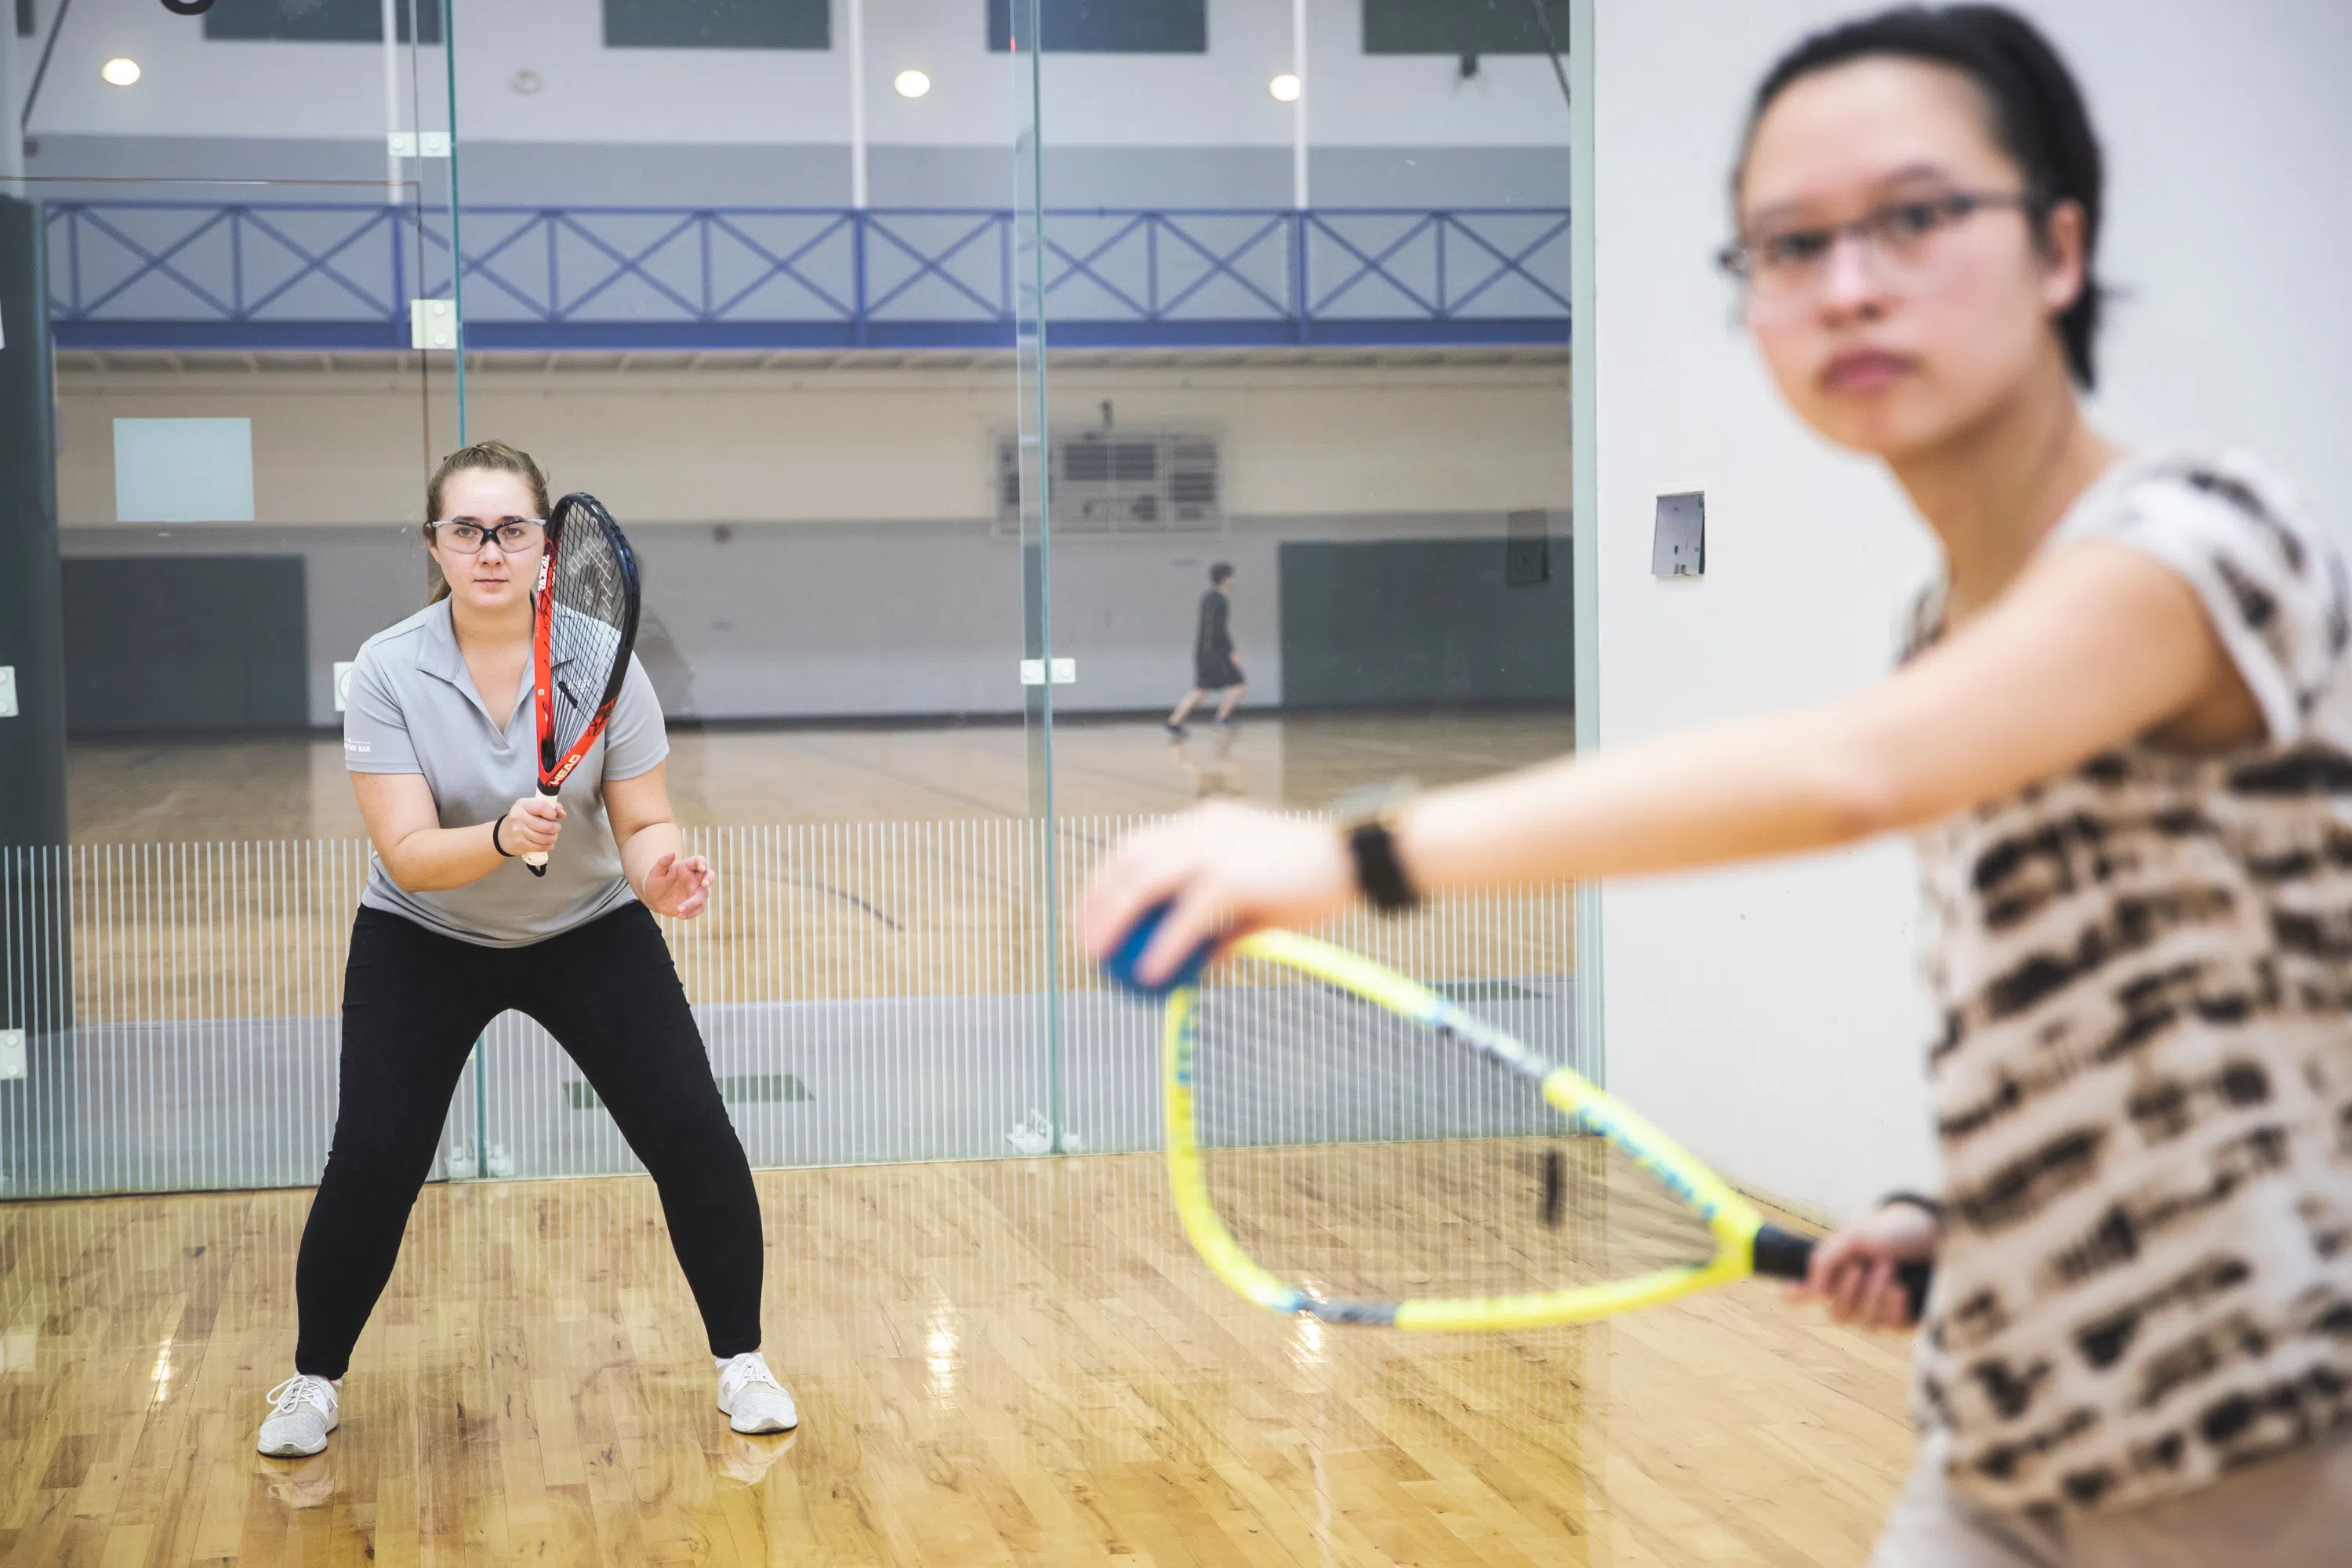 Two women playing racquetball.